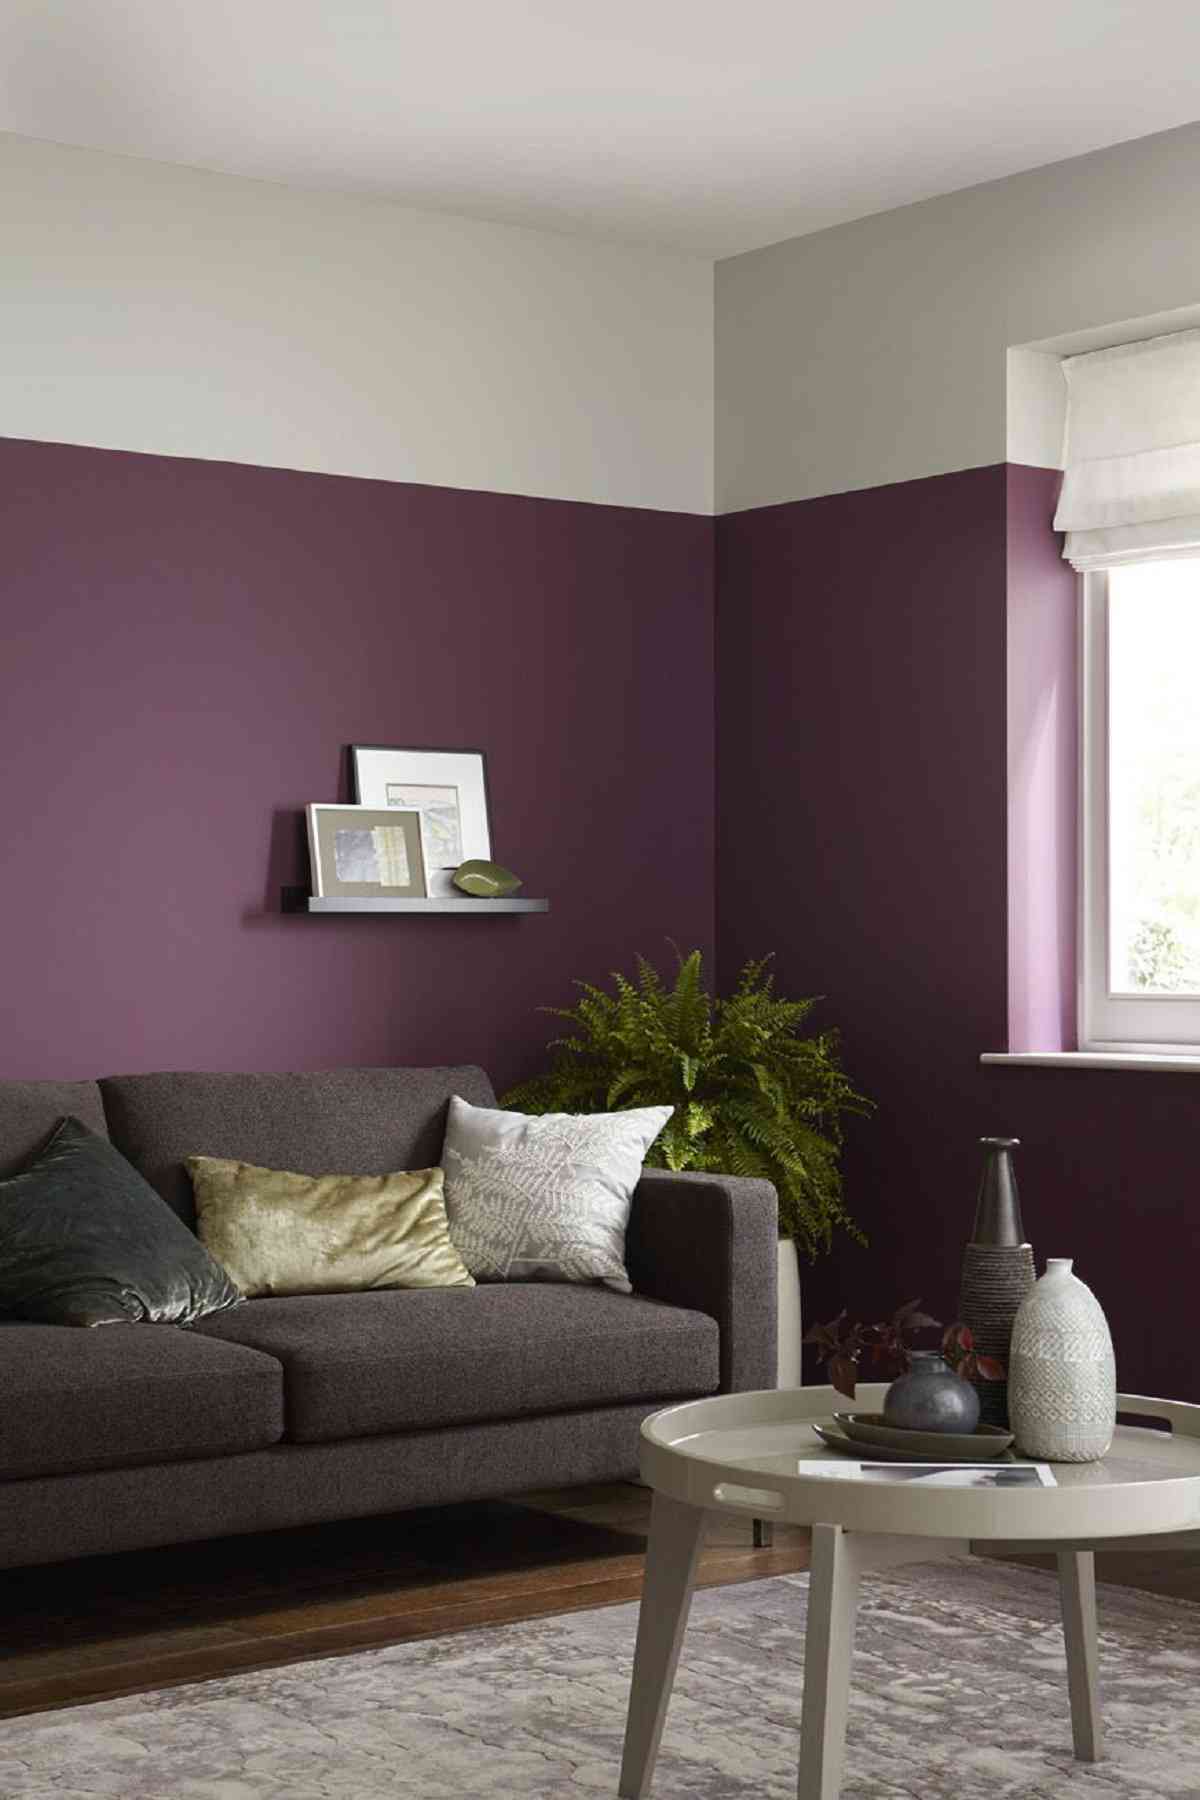 Descubre la tendencia decorativa: paredes bicolor 2